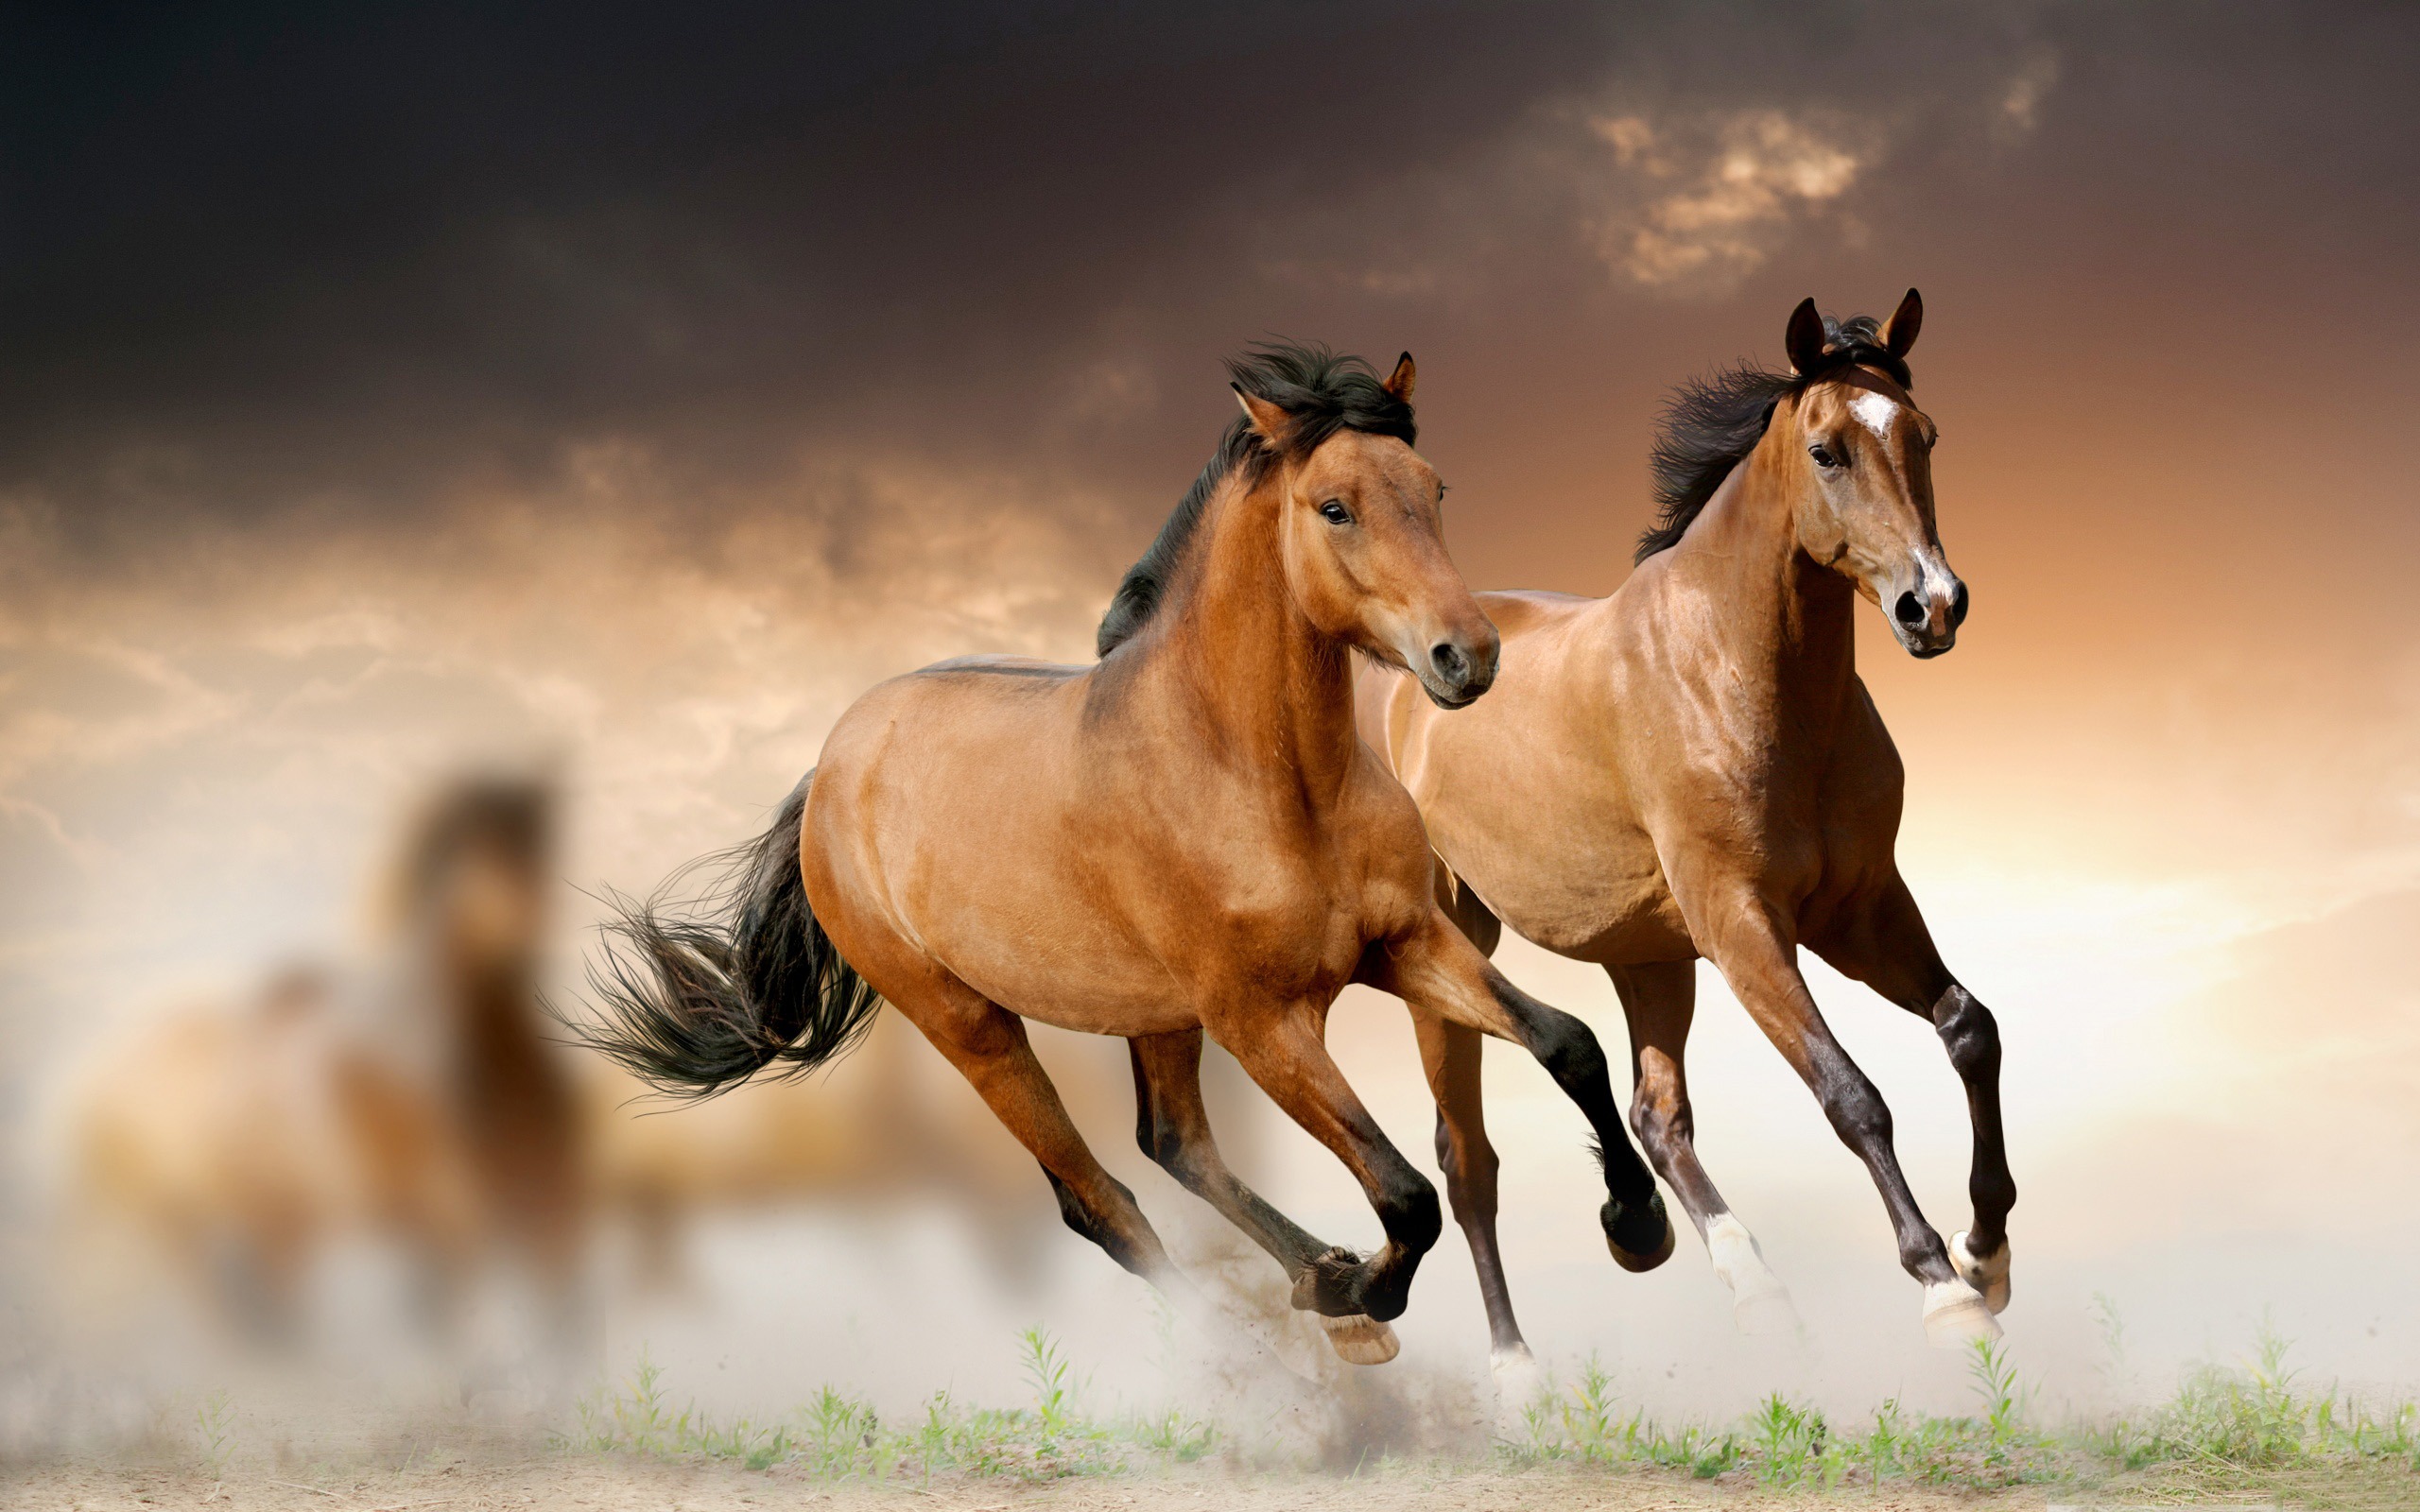 712354 descargar imagen animales, caballo, difuminado, correr: fondos de pantalla y protectores de pantalla gratis